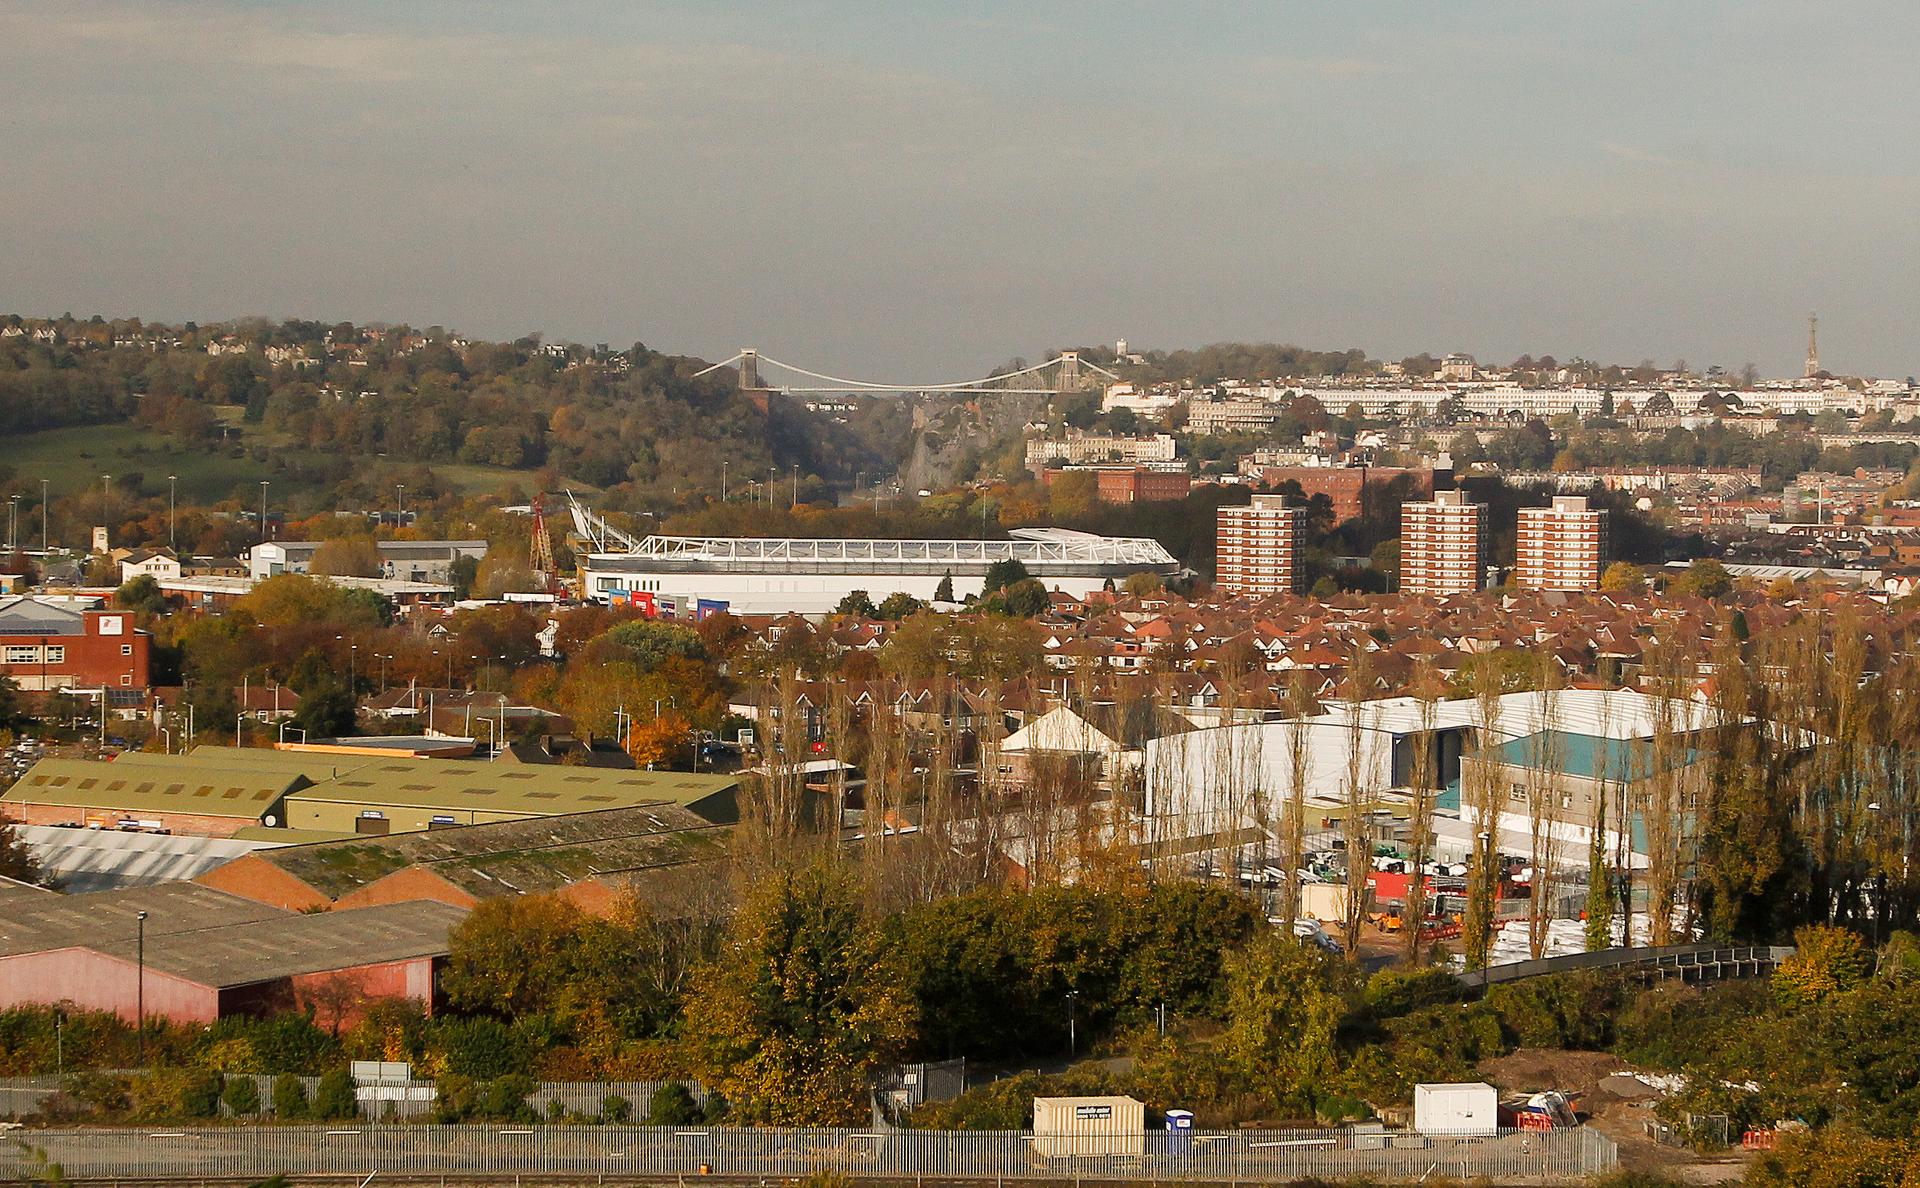 A general view of Ashton Gate Stadium and Clifton Suspension Bridge in Bristol, UK.